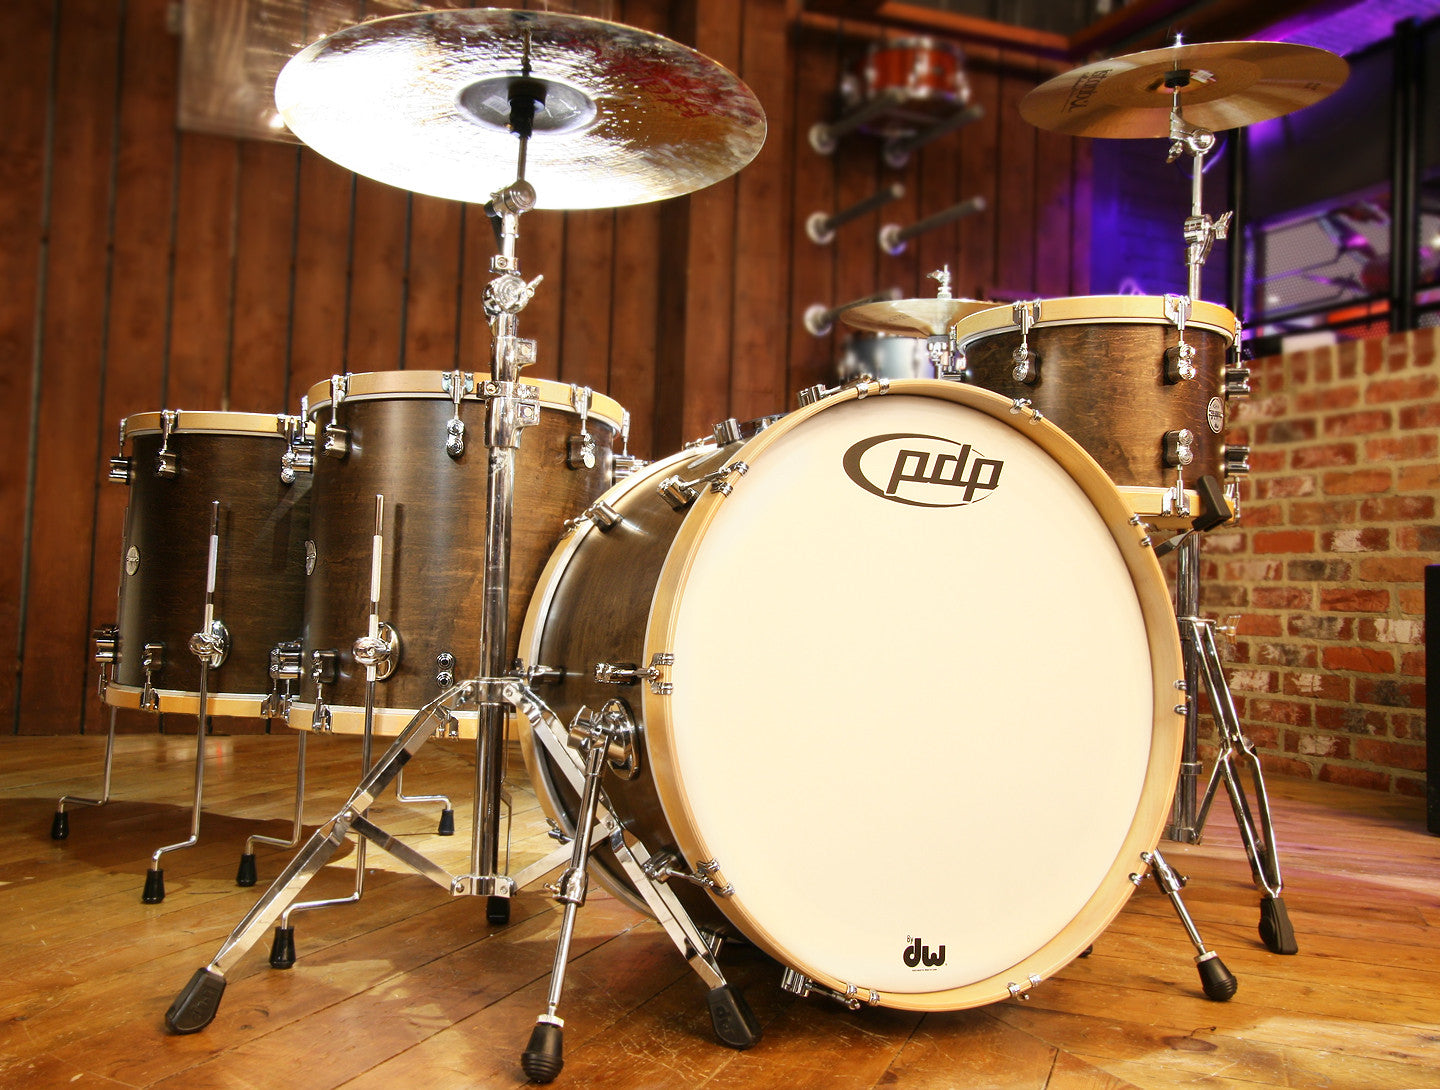 Drum Workshop PDP Walnut drum kit